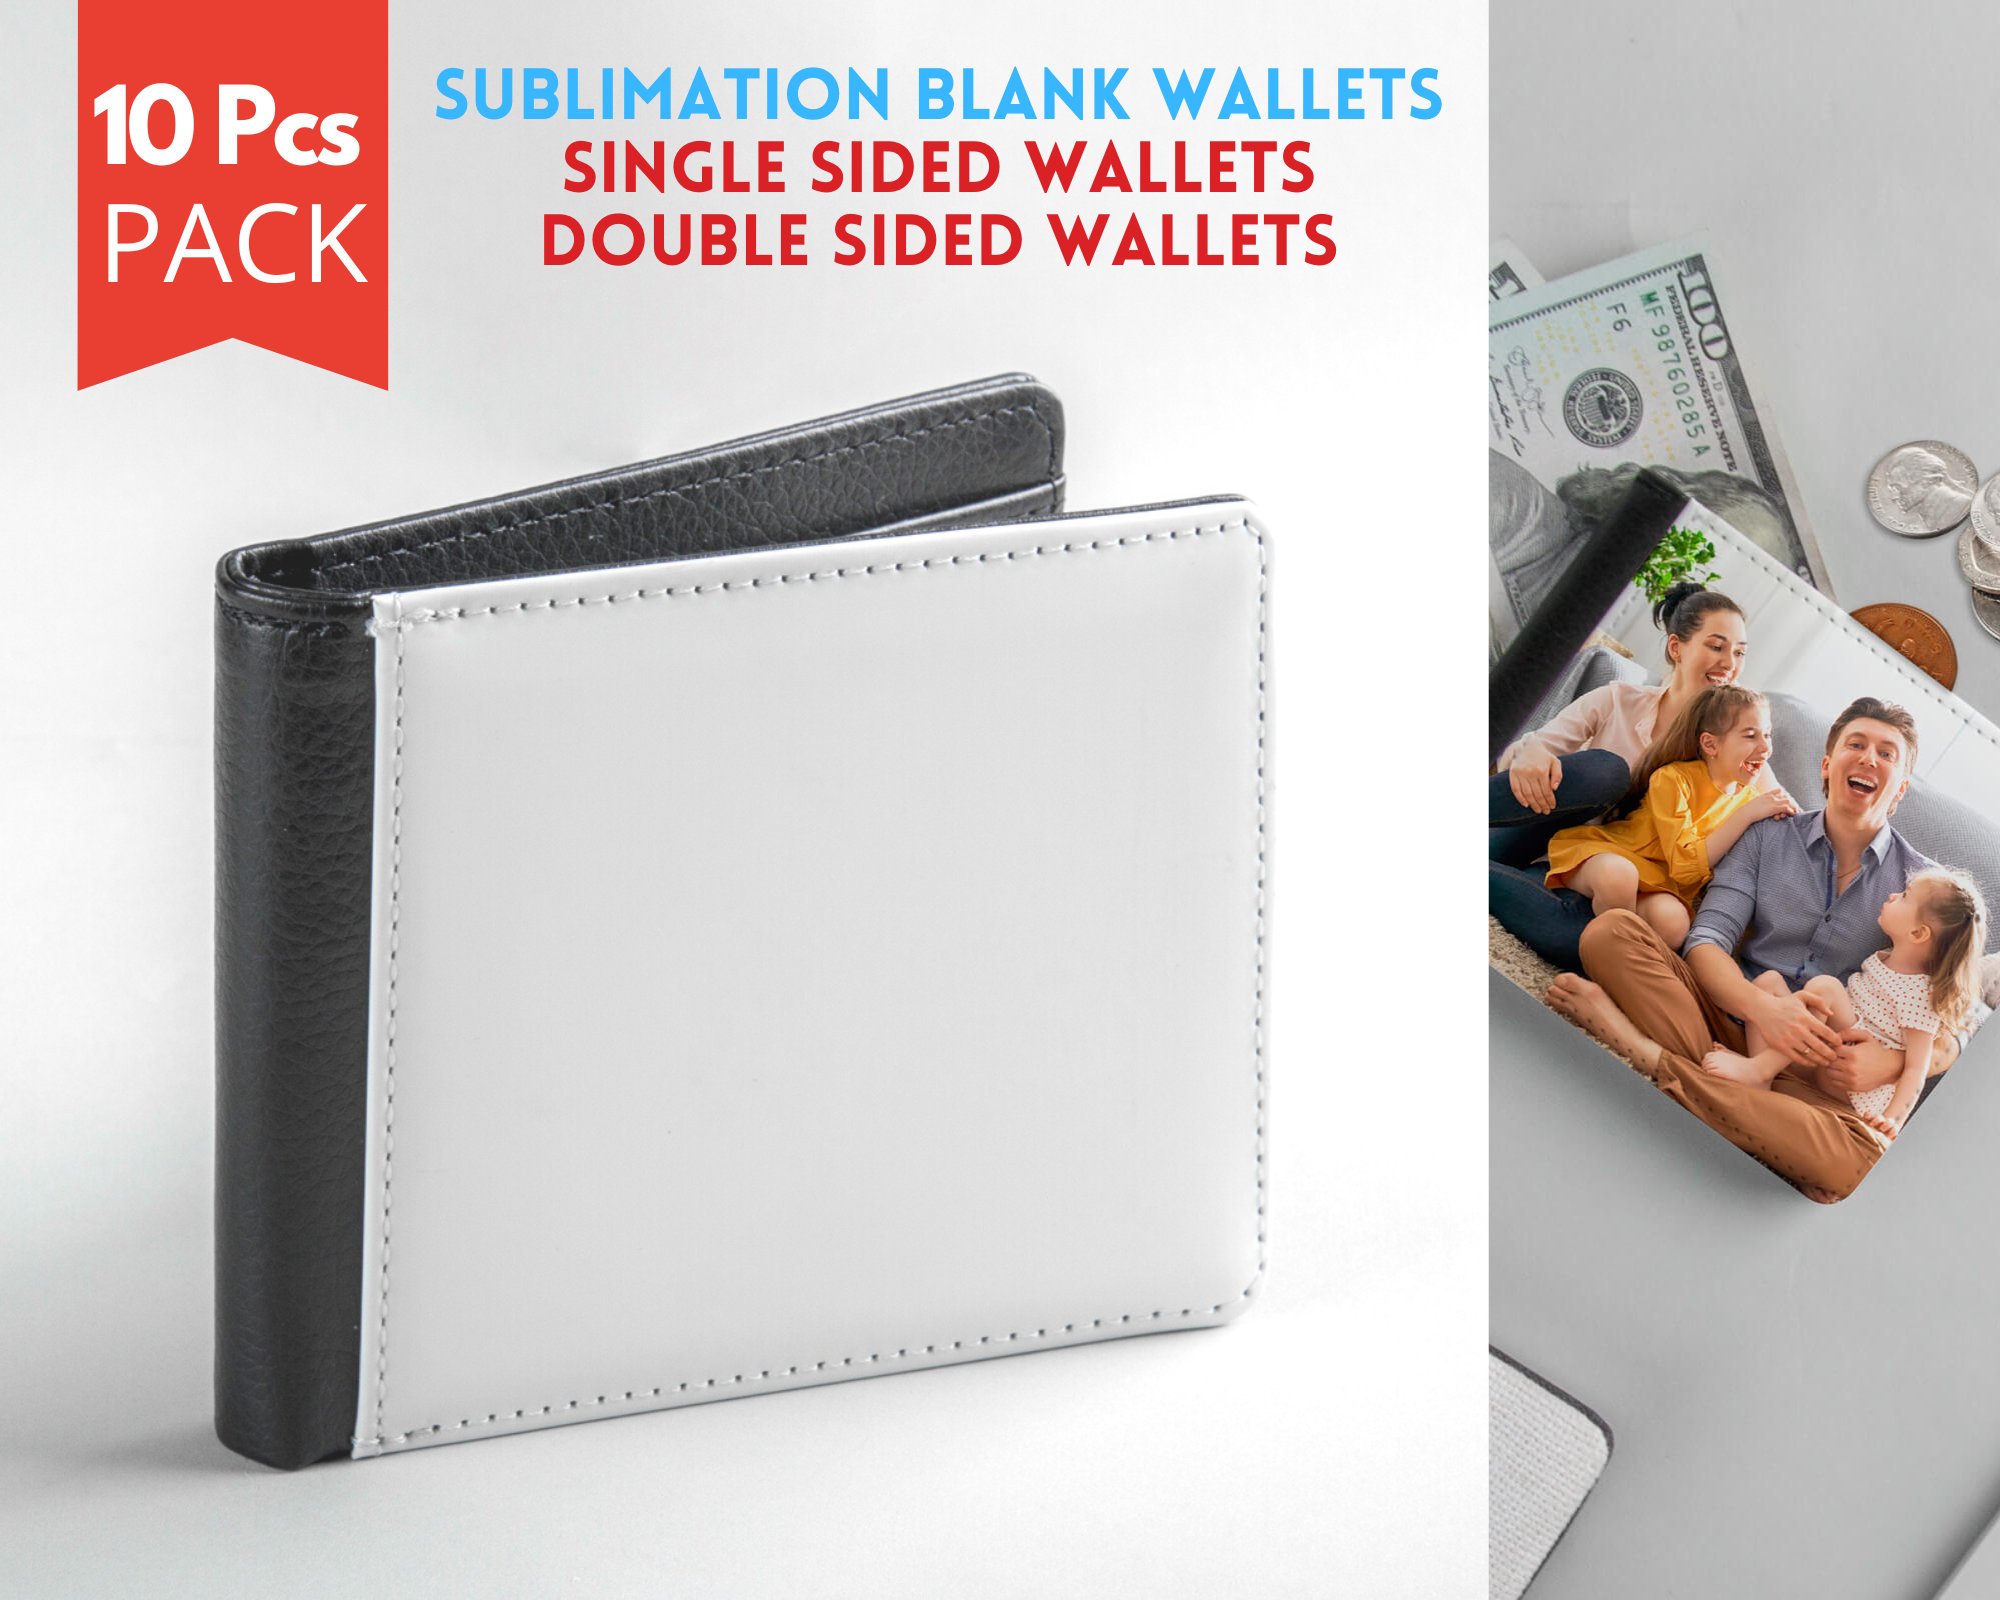 Mens sublimation wallets